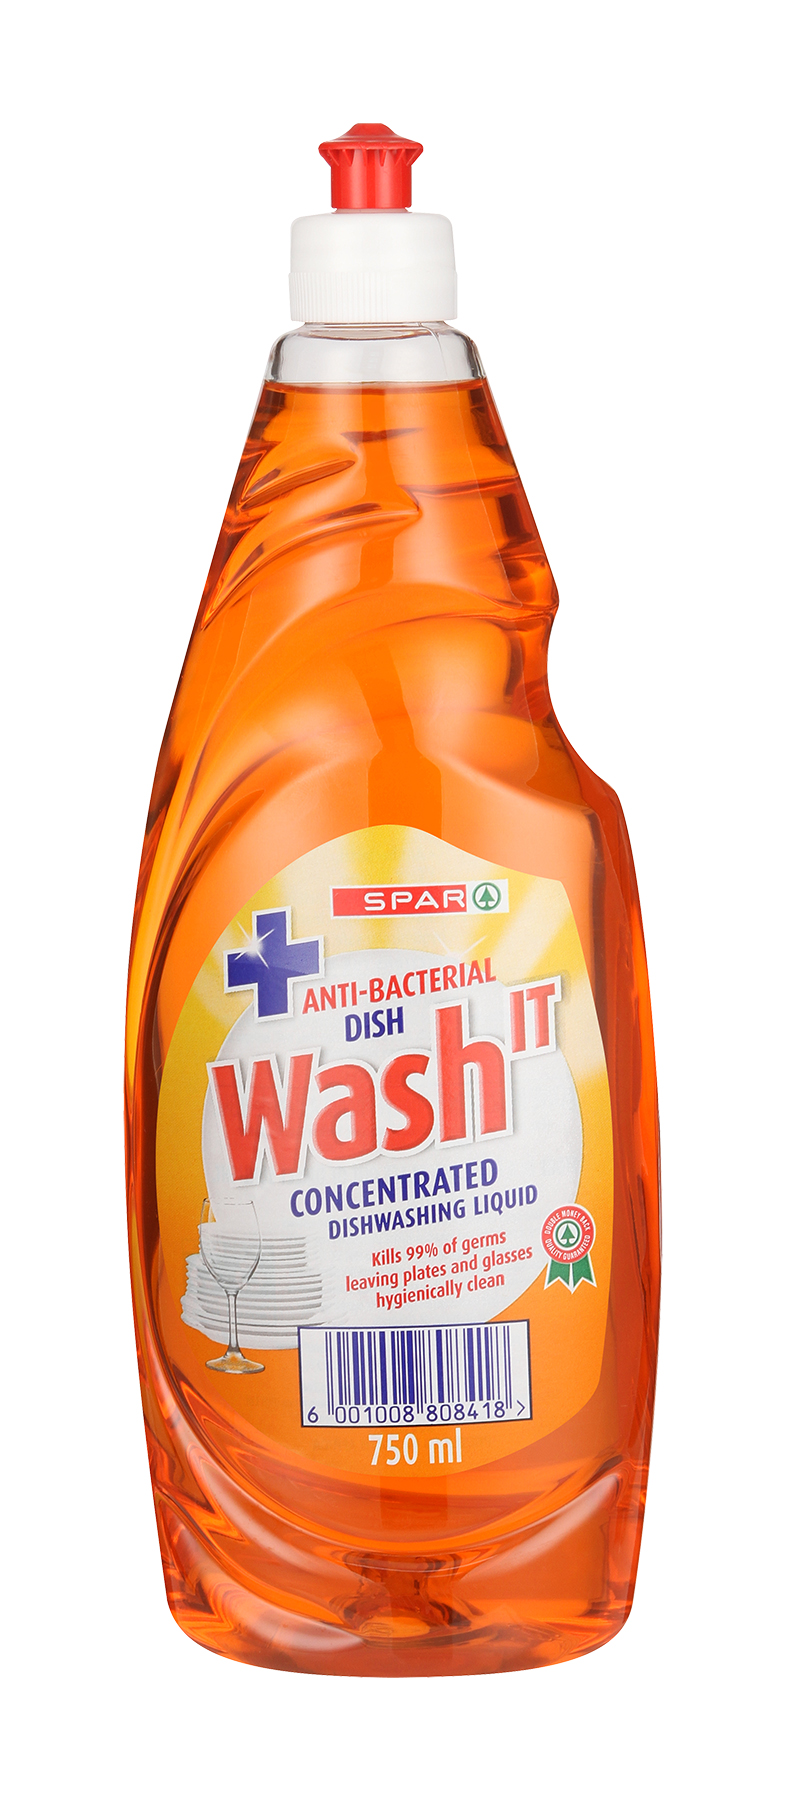 dishwash it liquid anti-bacterial